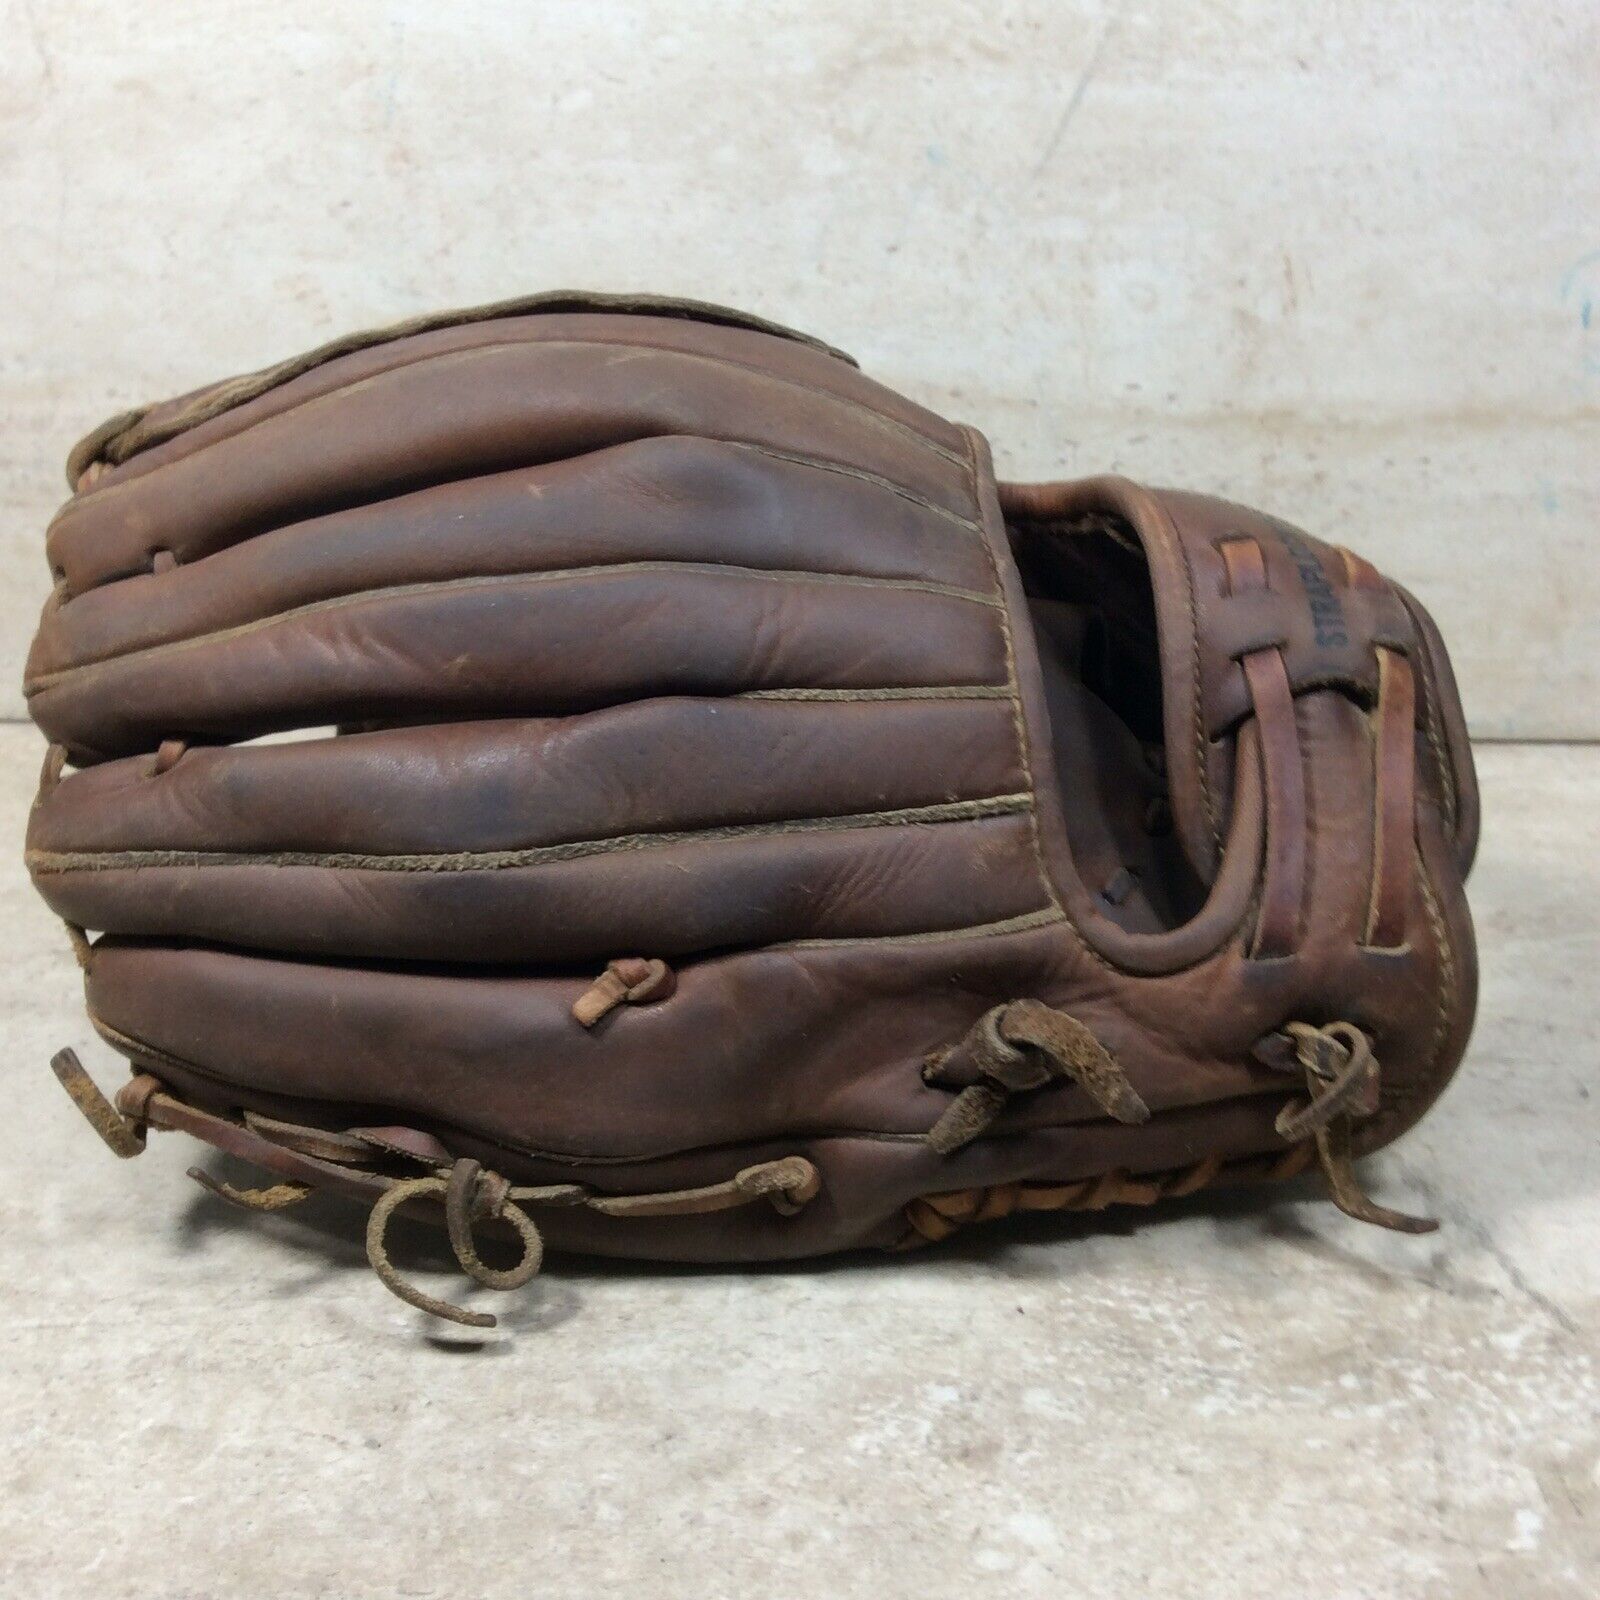 Wilson A2600 Glenn Beckert Baseball Glove Chicago Cubs Pro Model Vintage RHT